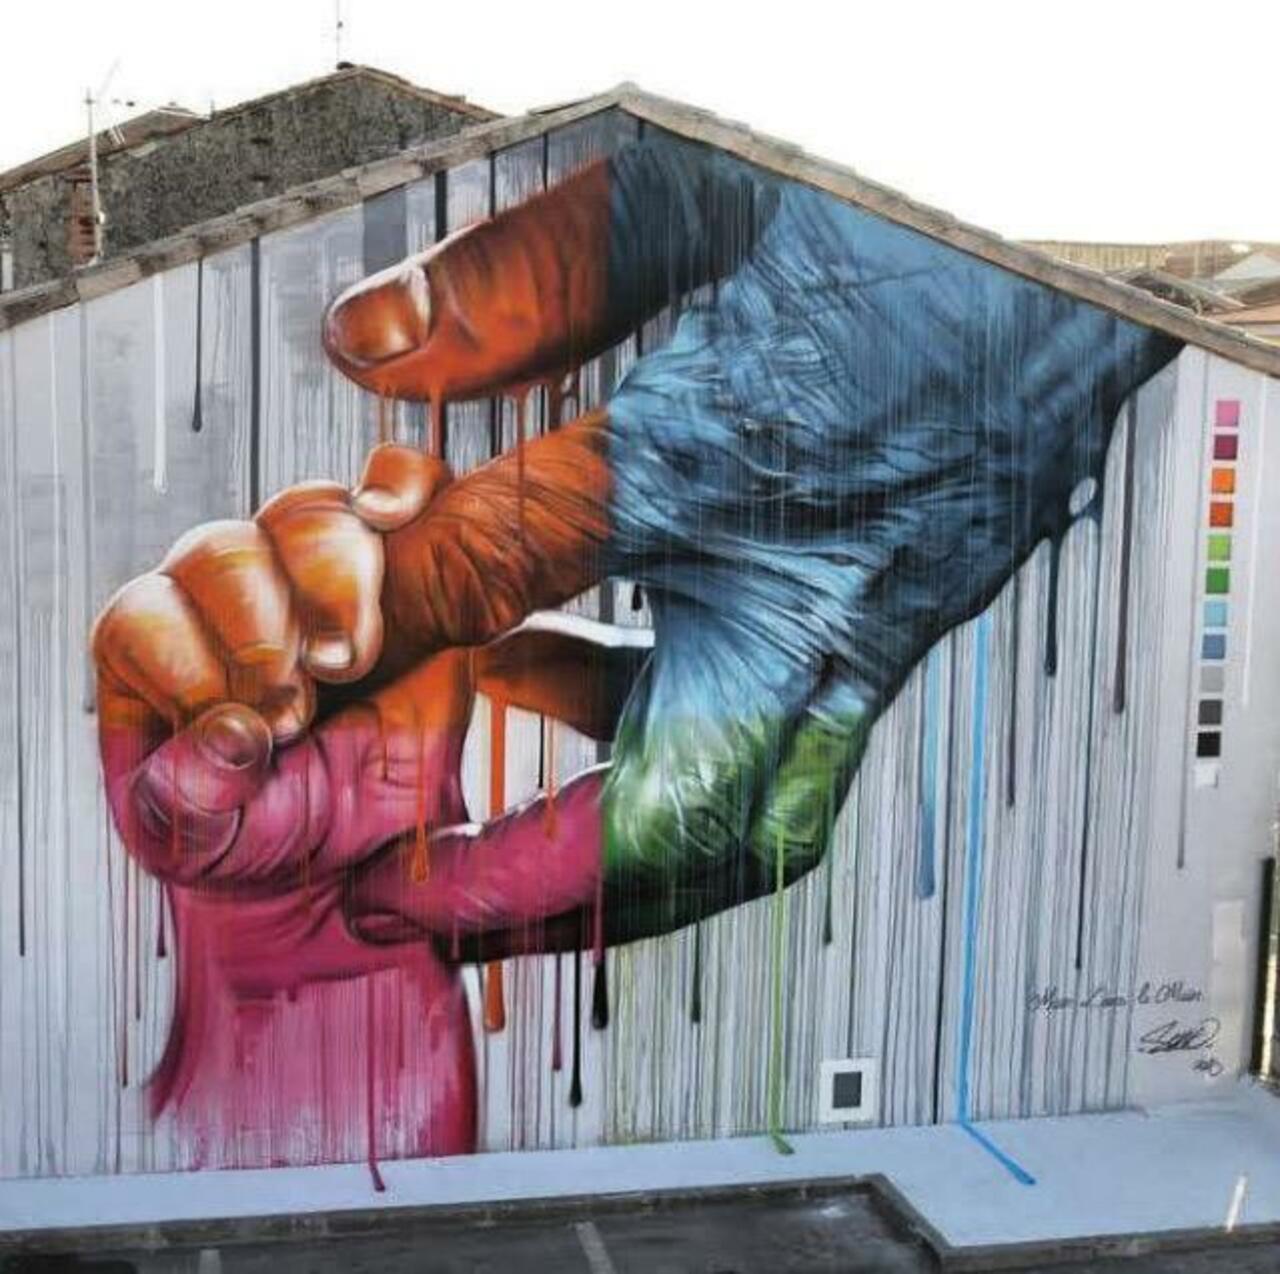 RT @Trxll_Squad: Seno Street Art 

#art #graffiti #mural #streetart http://t.co/l6HAgnY2Am